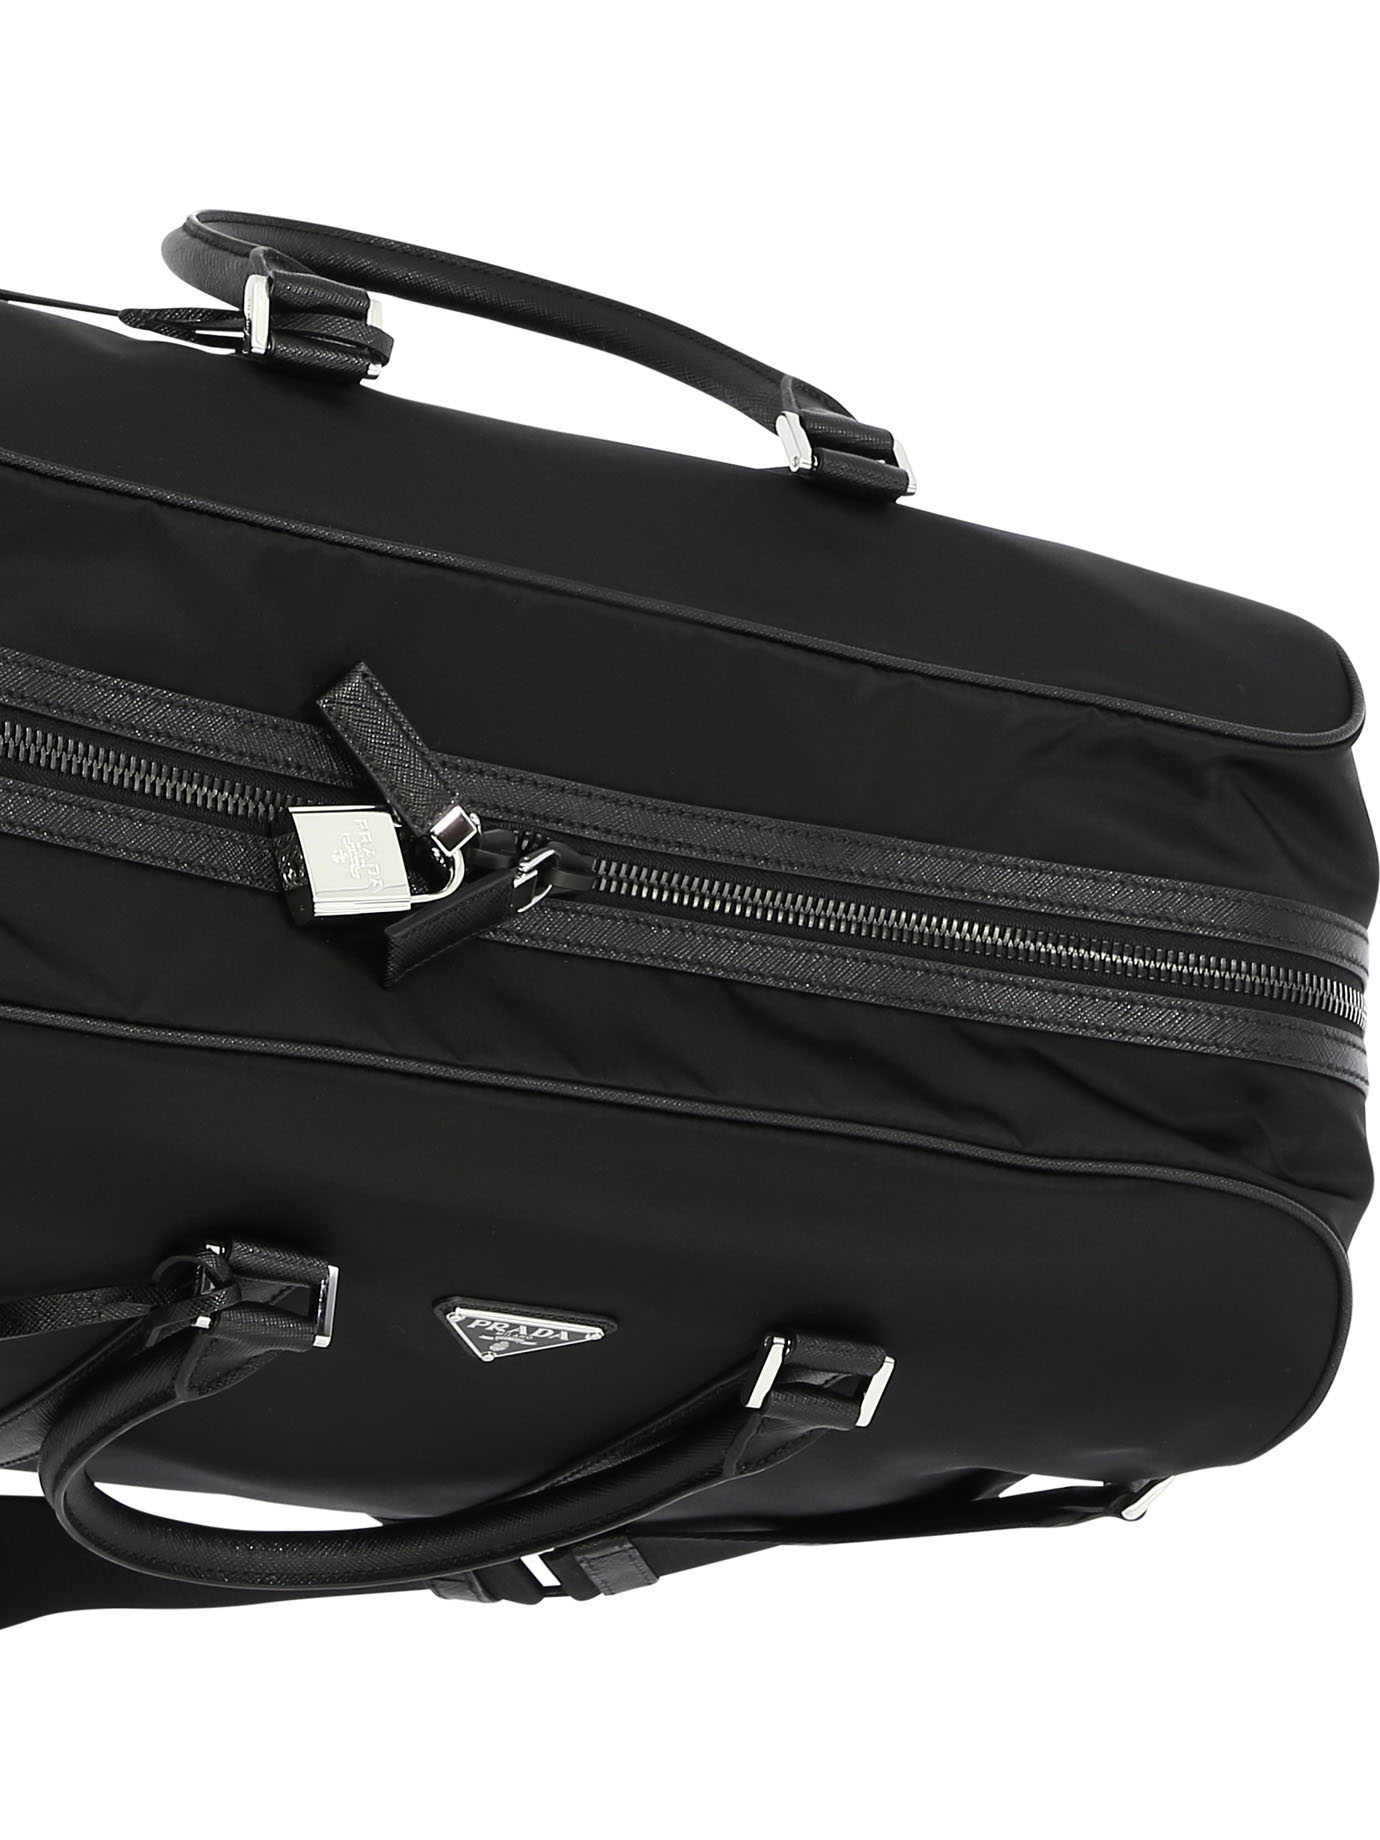 PRADA Re-Nylon and Saffiano leather duffel bag